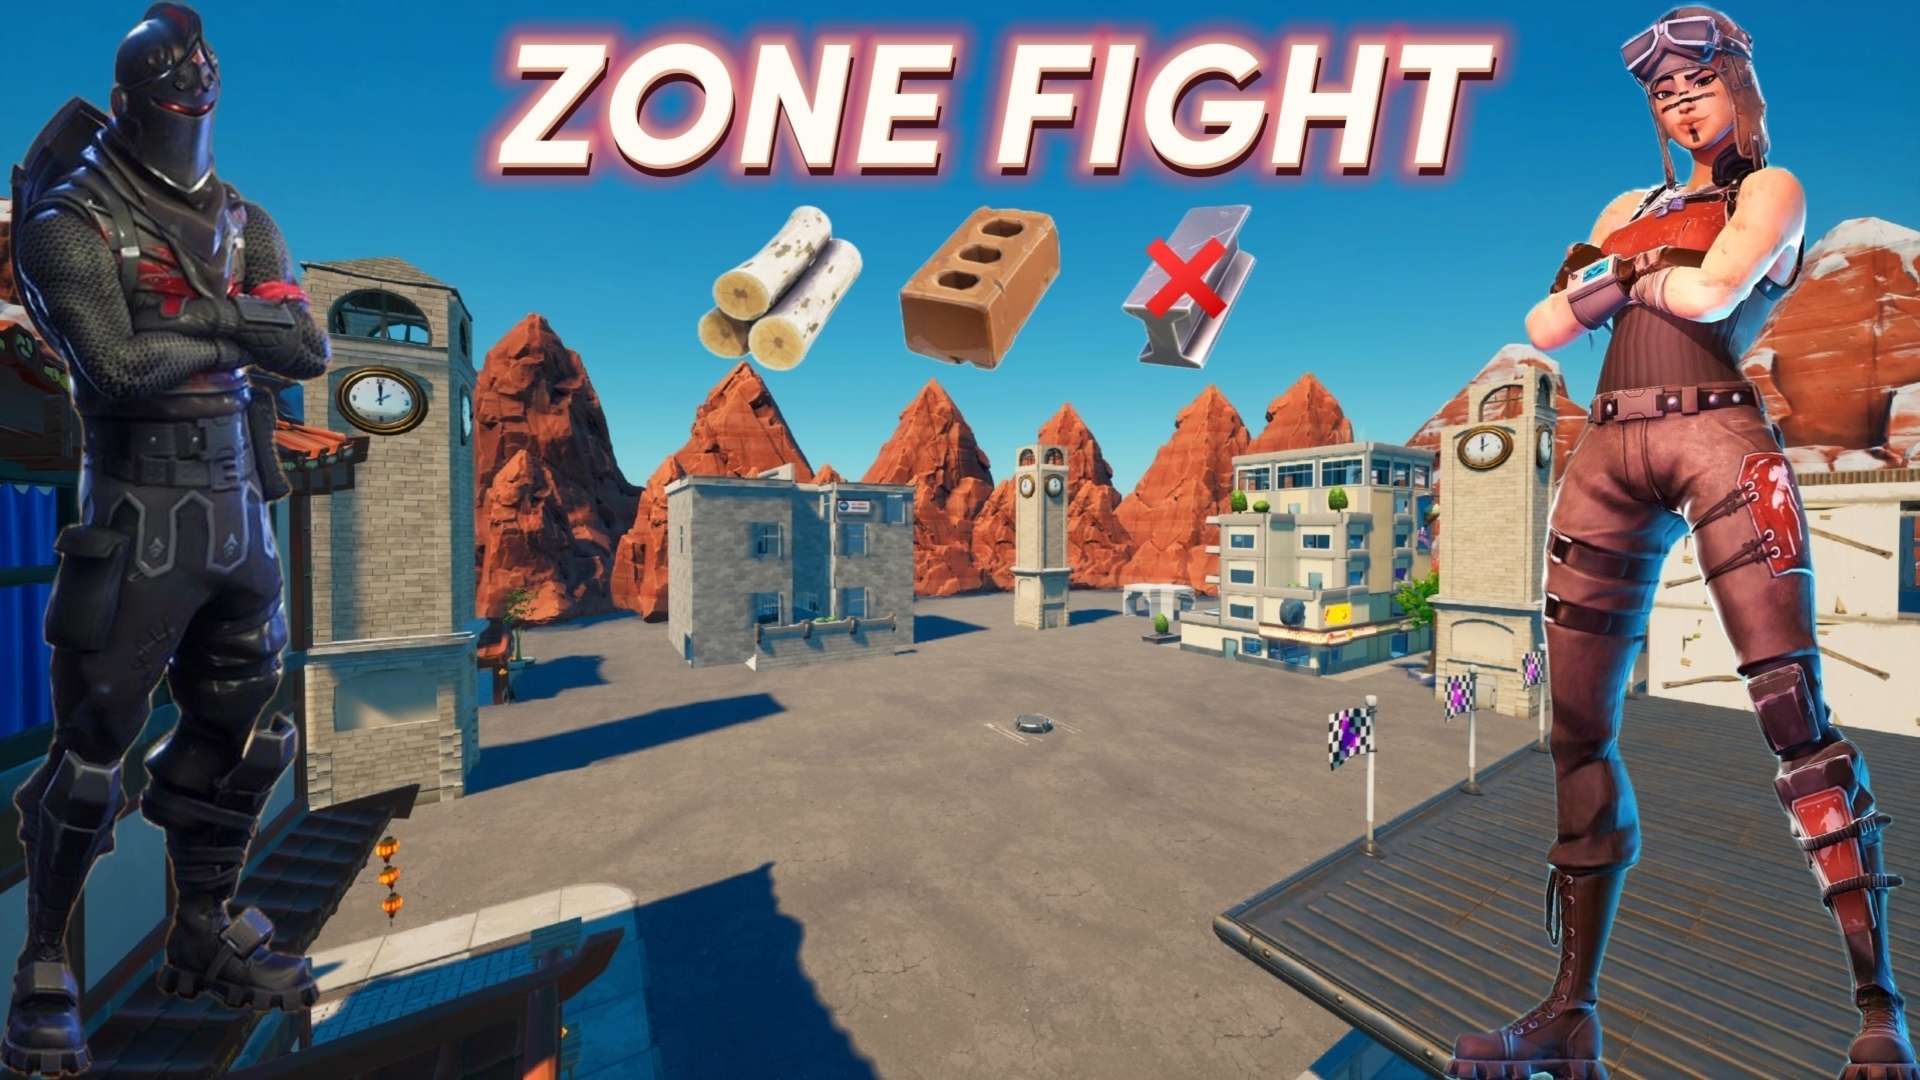 Zone fight